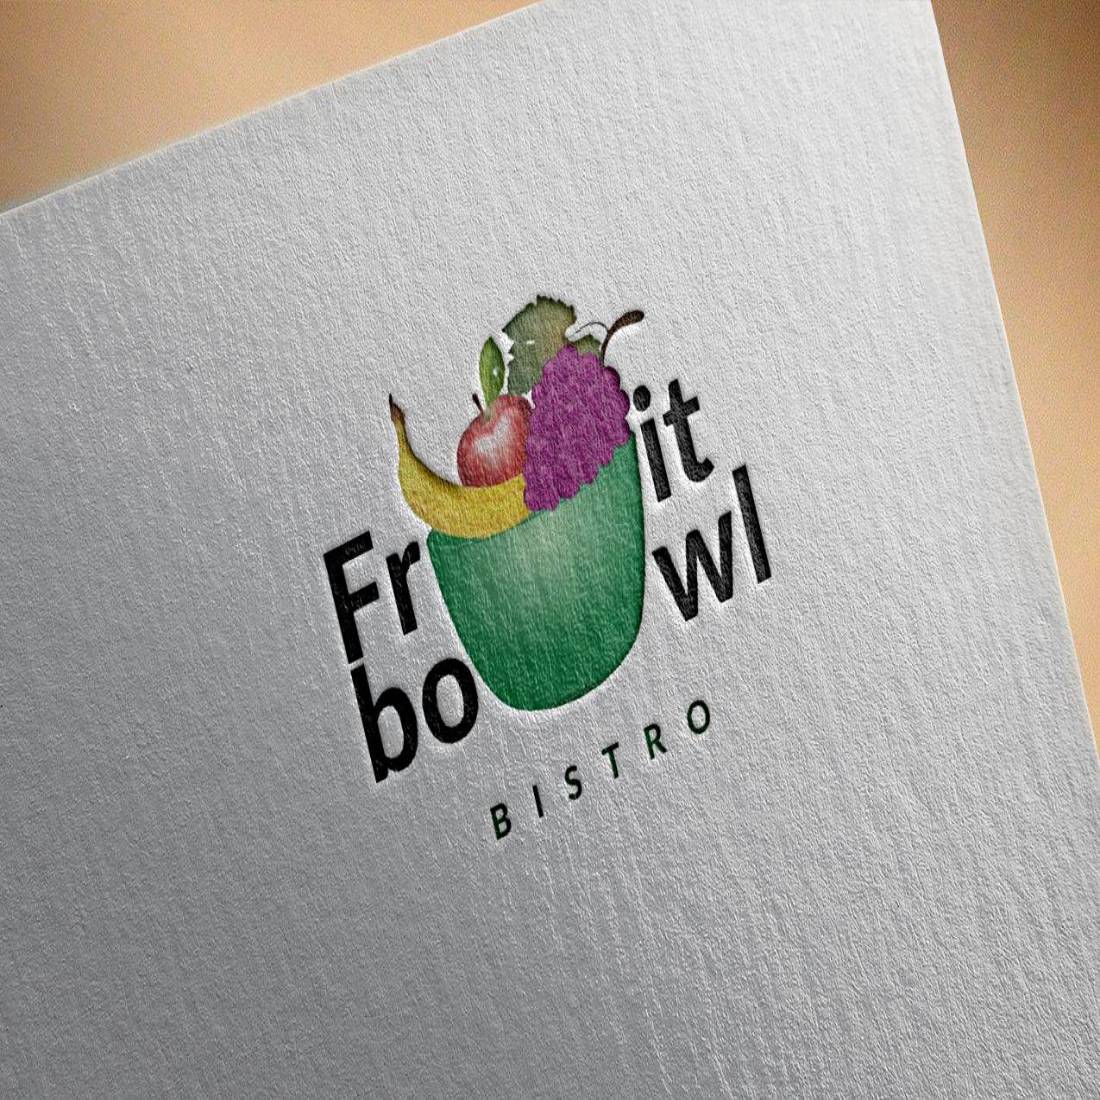 Health Fast Food Bistro Logo Design cover image.